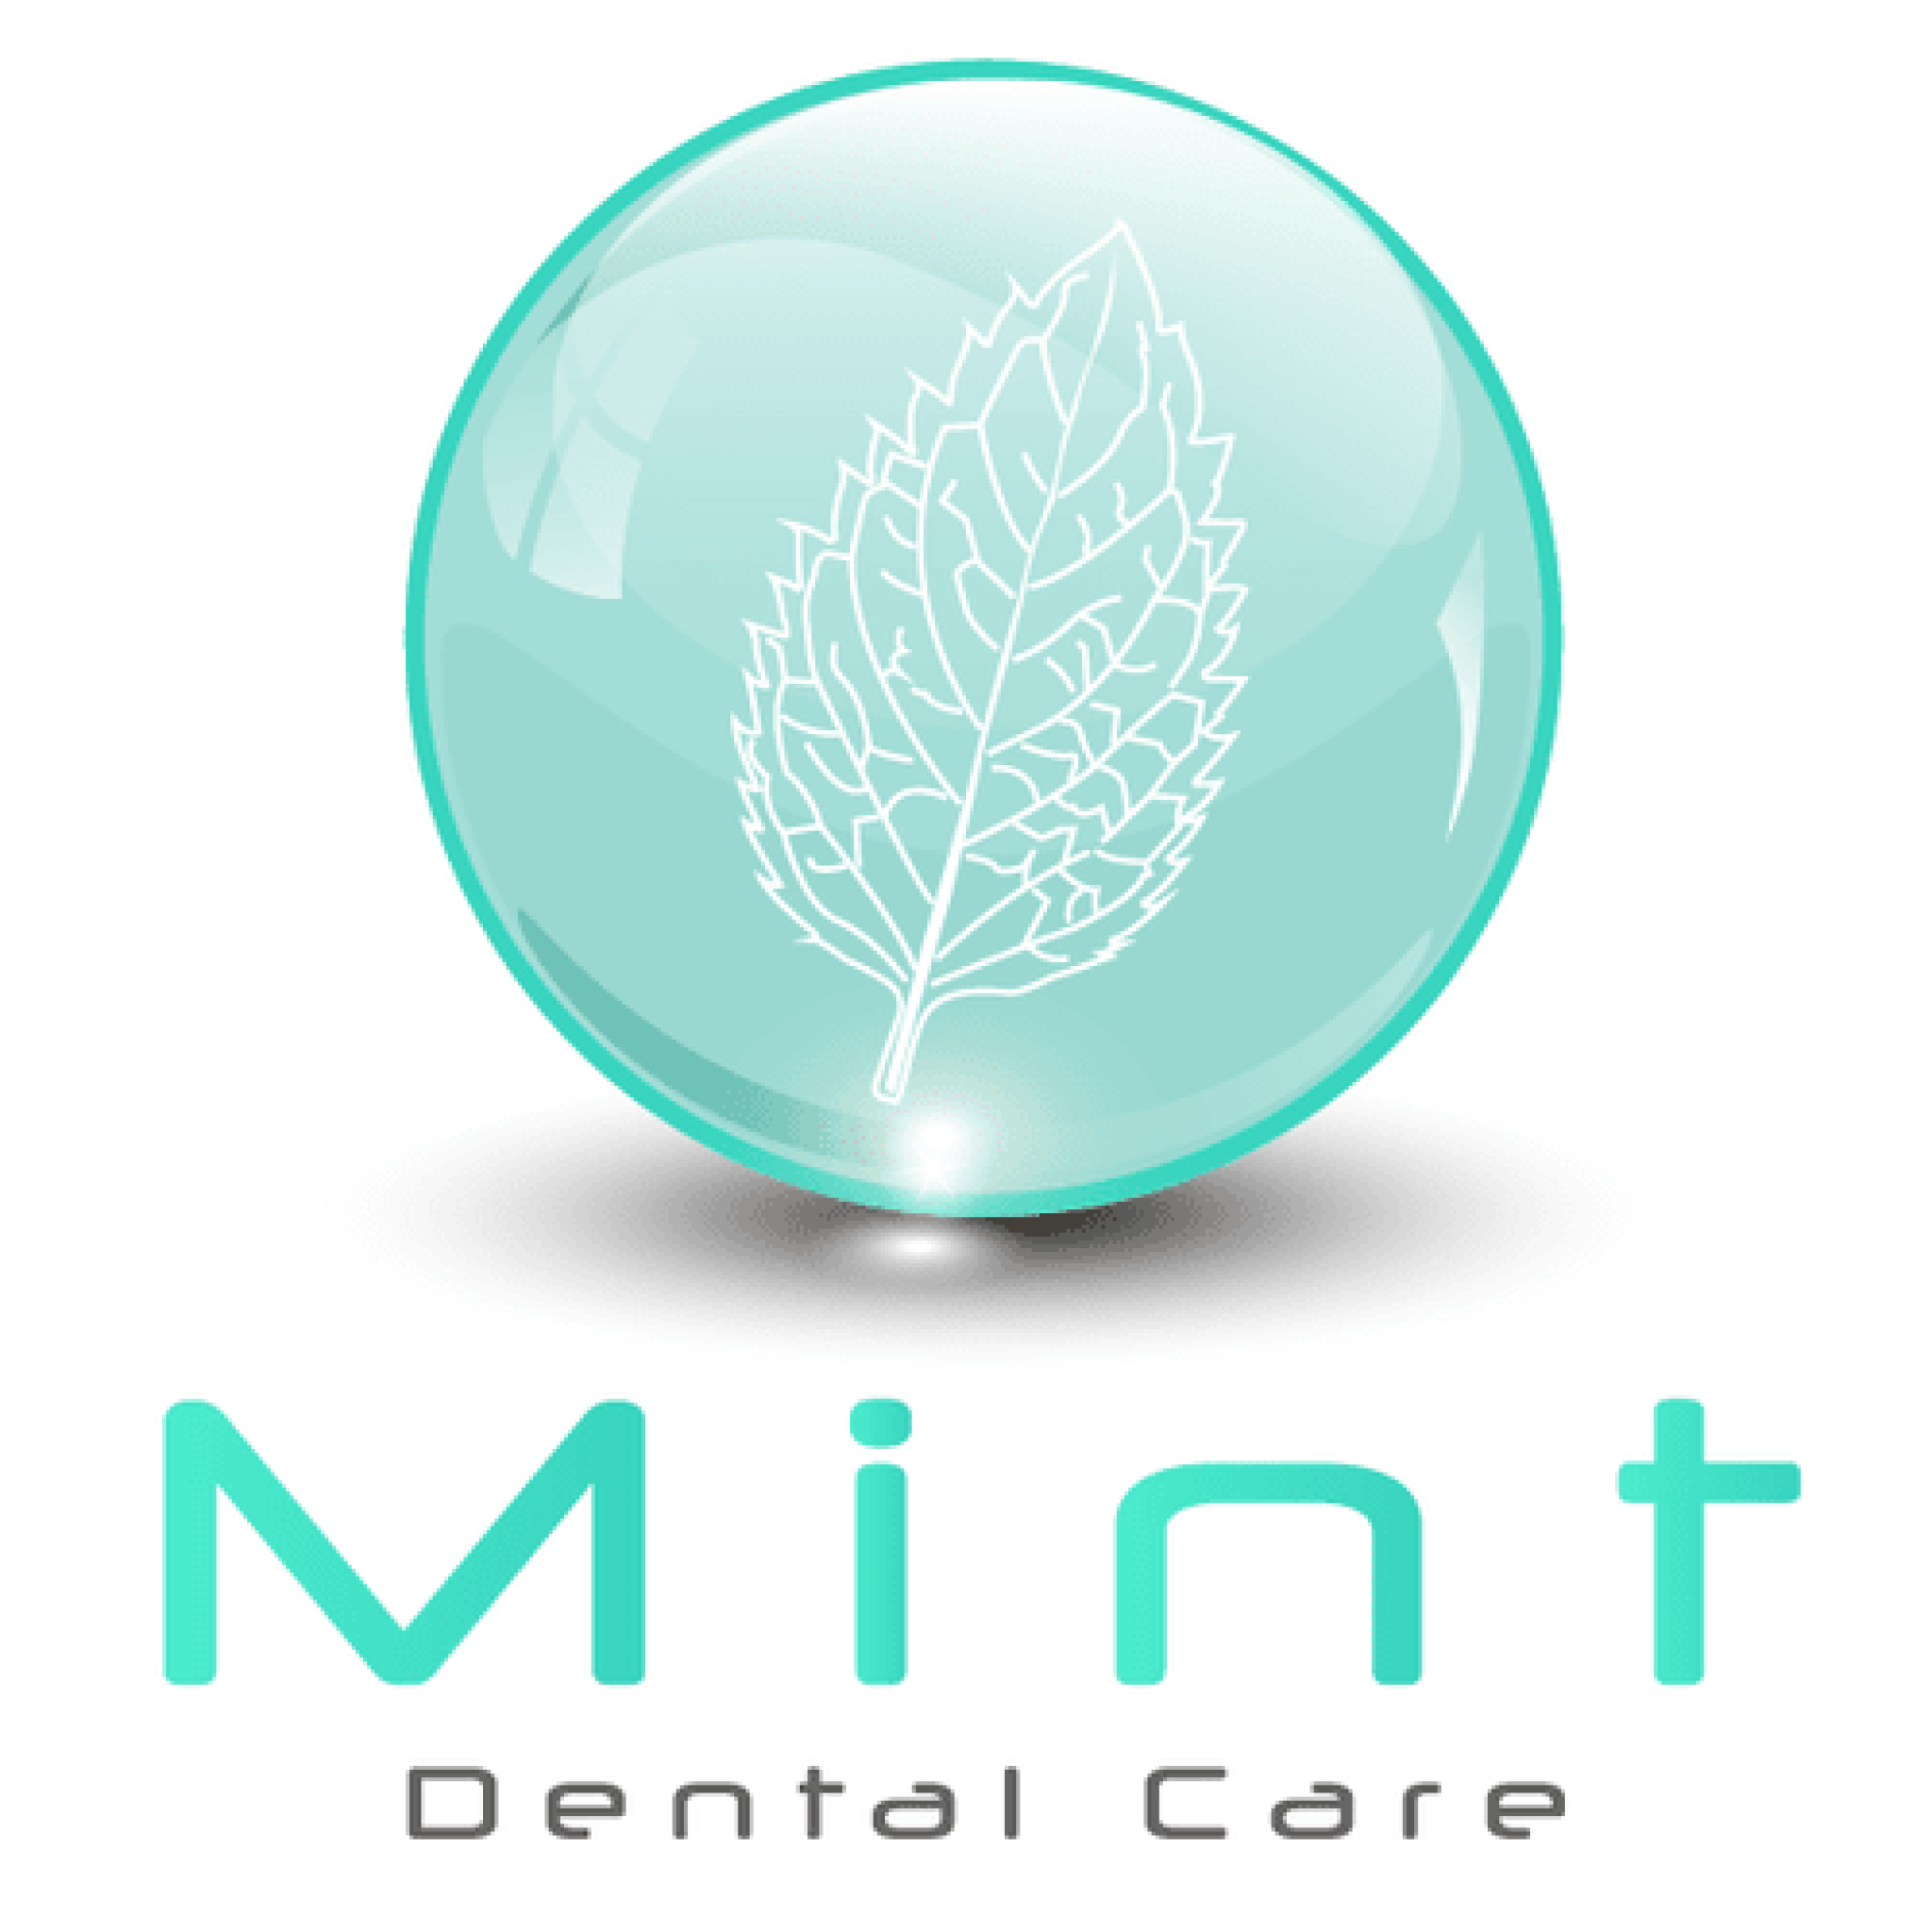 Mint Dental Care